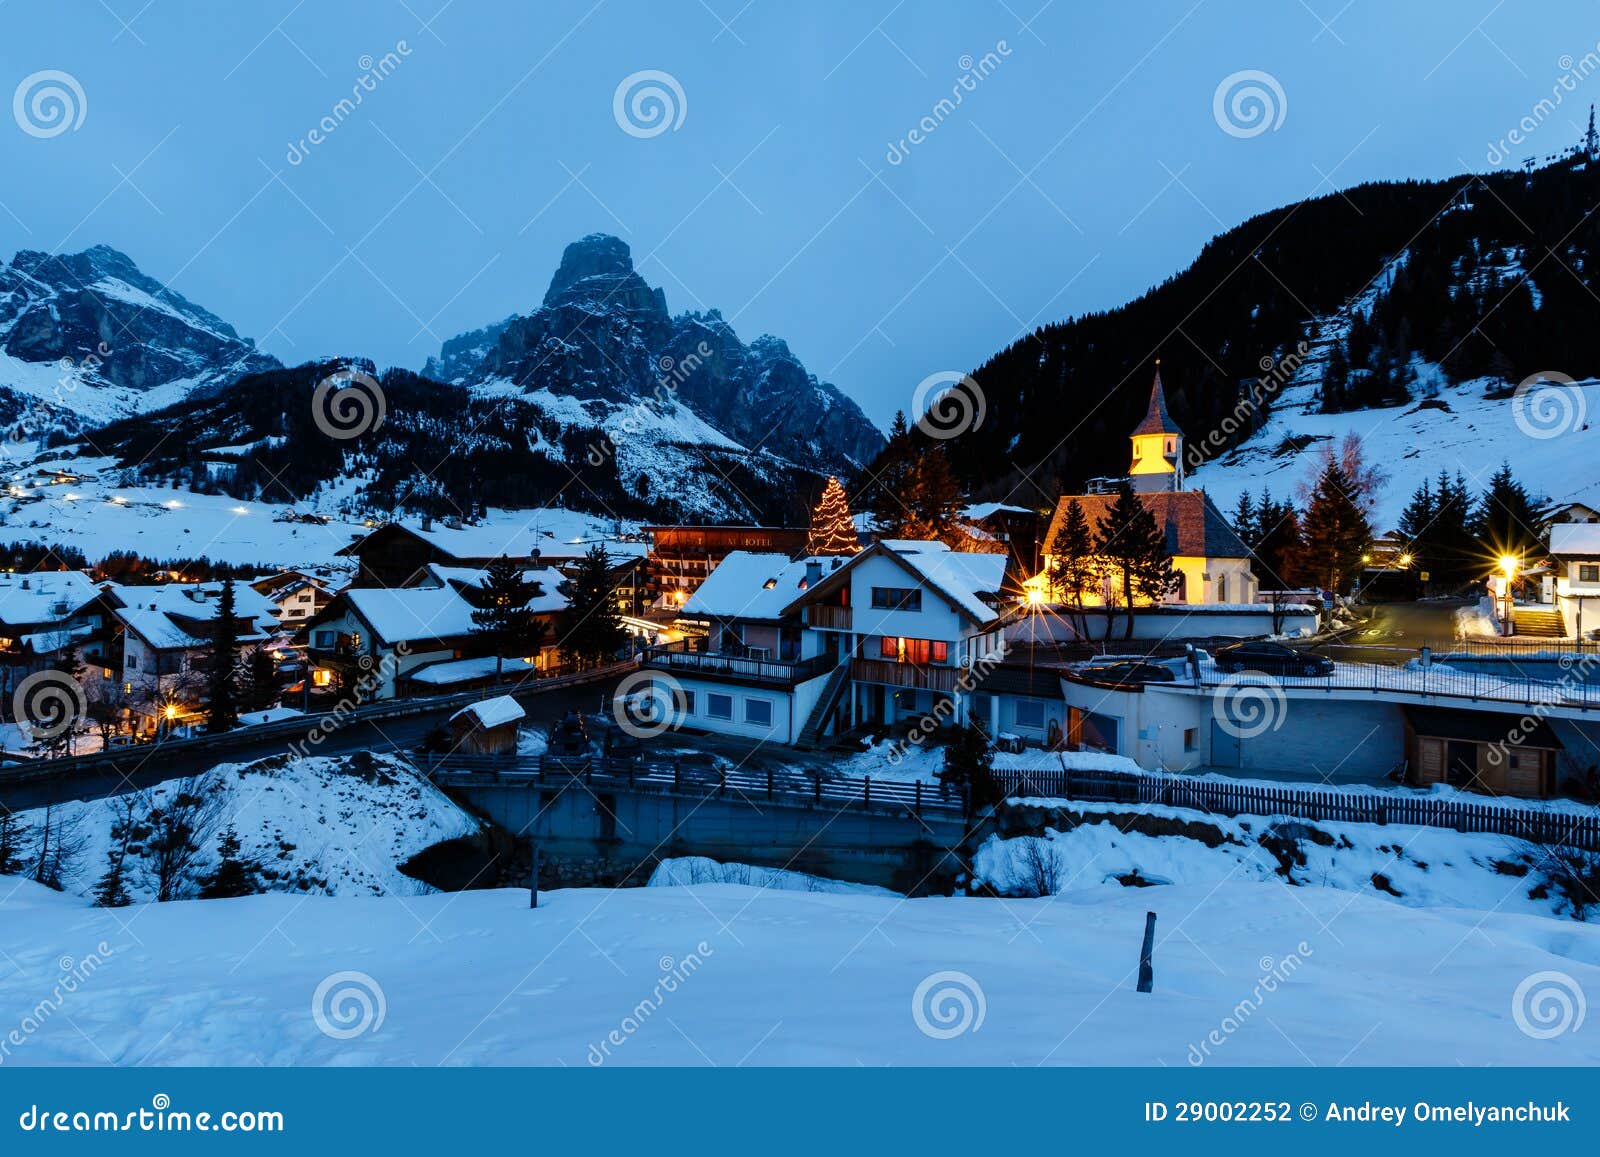 ski resort of corvara at night, alta badia